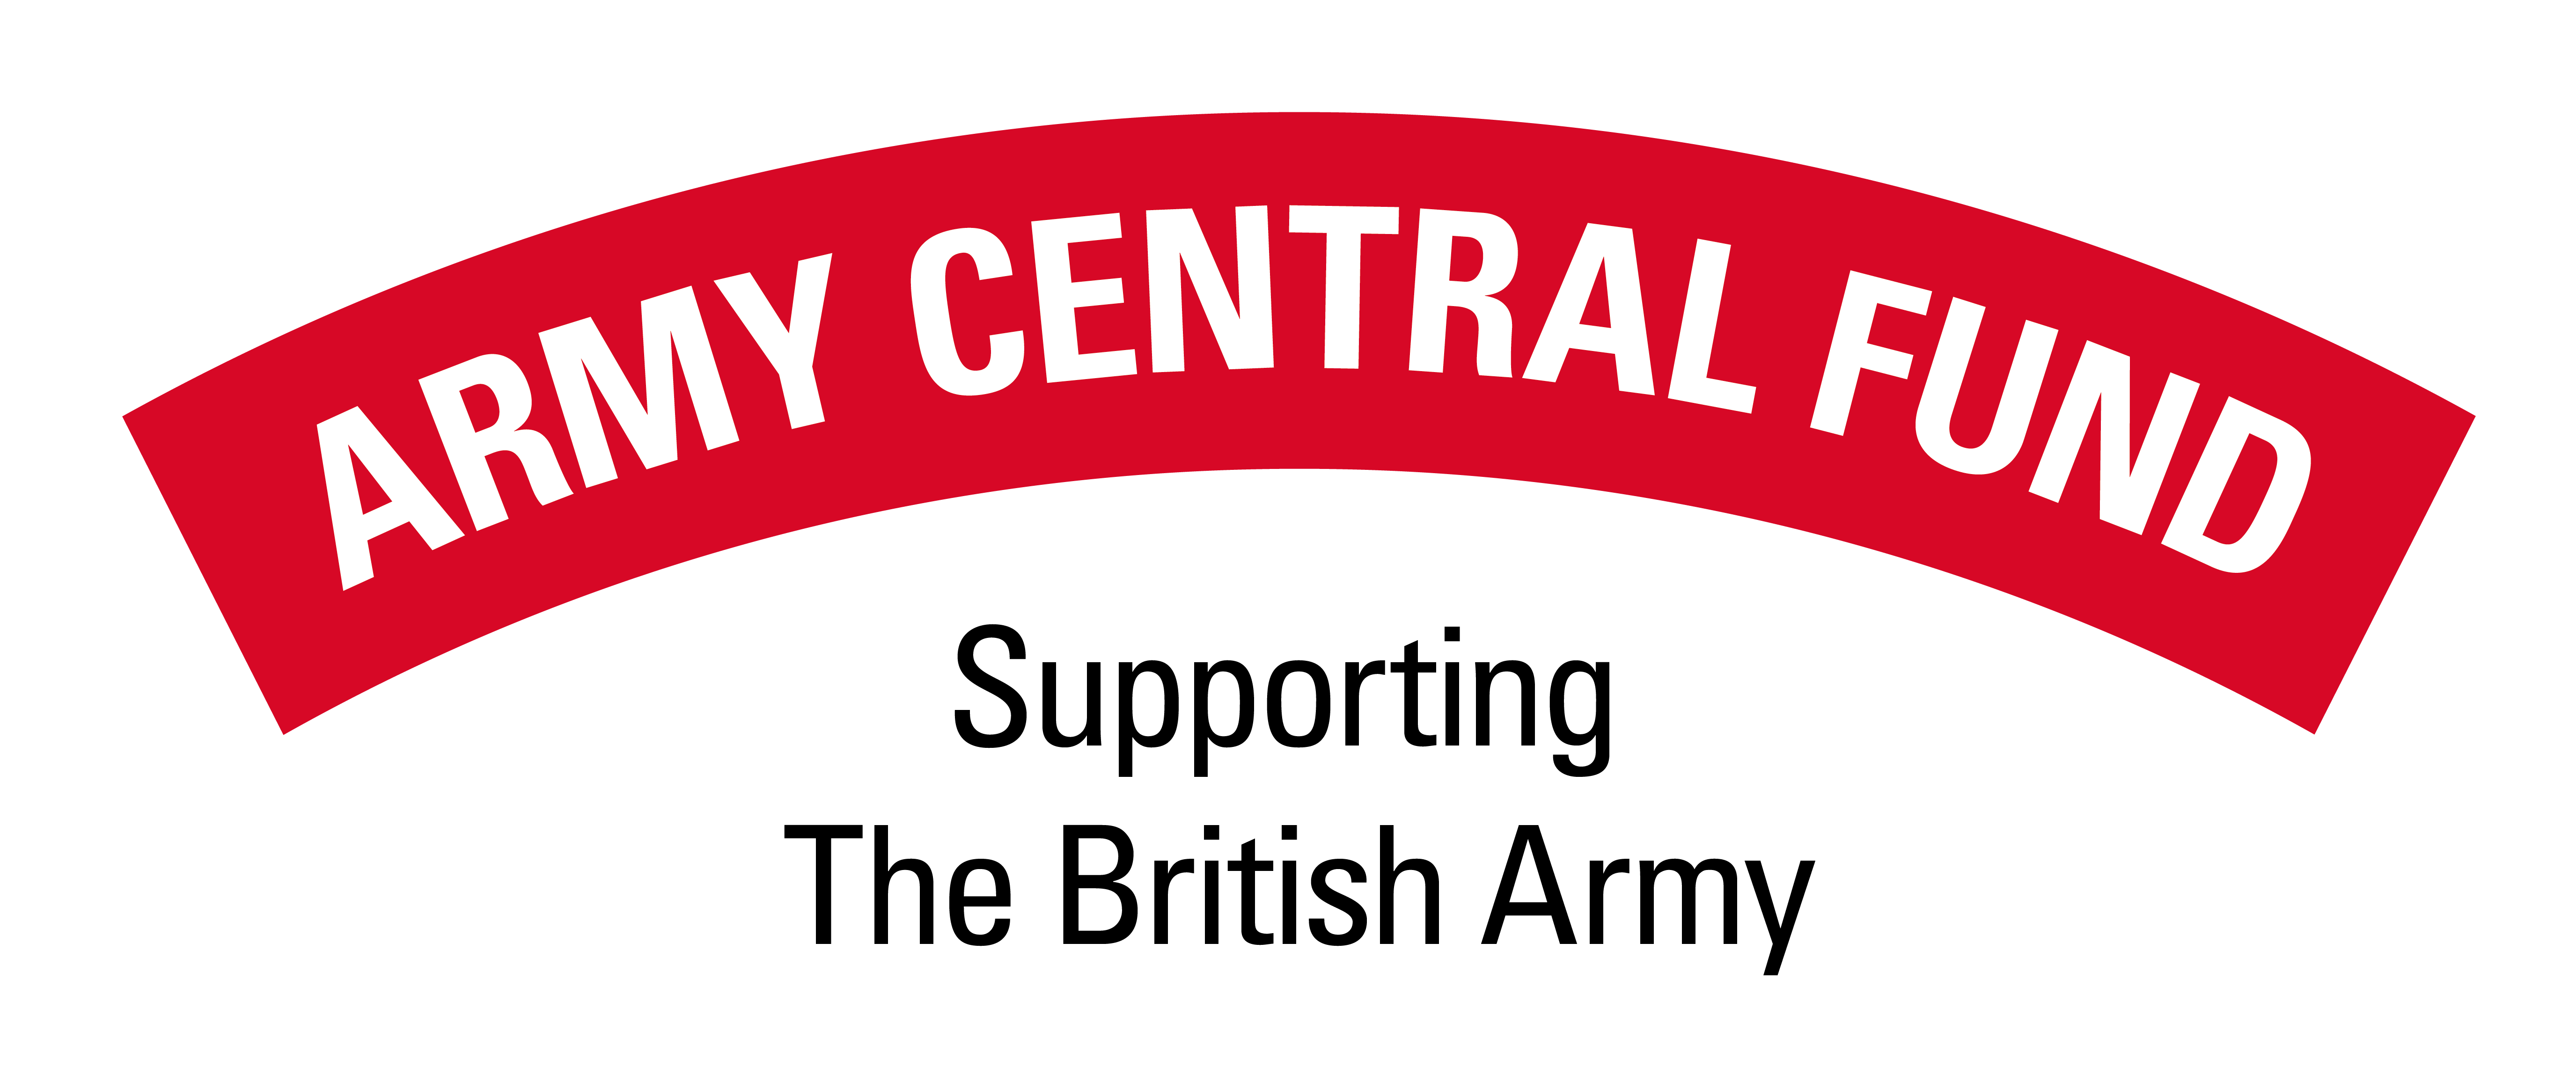 Army Central Fund